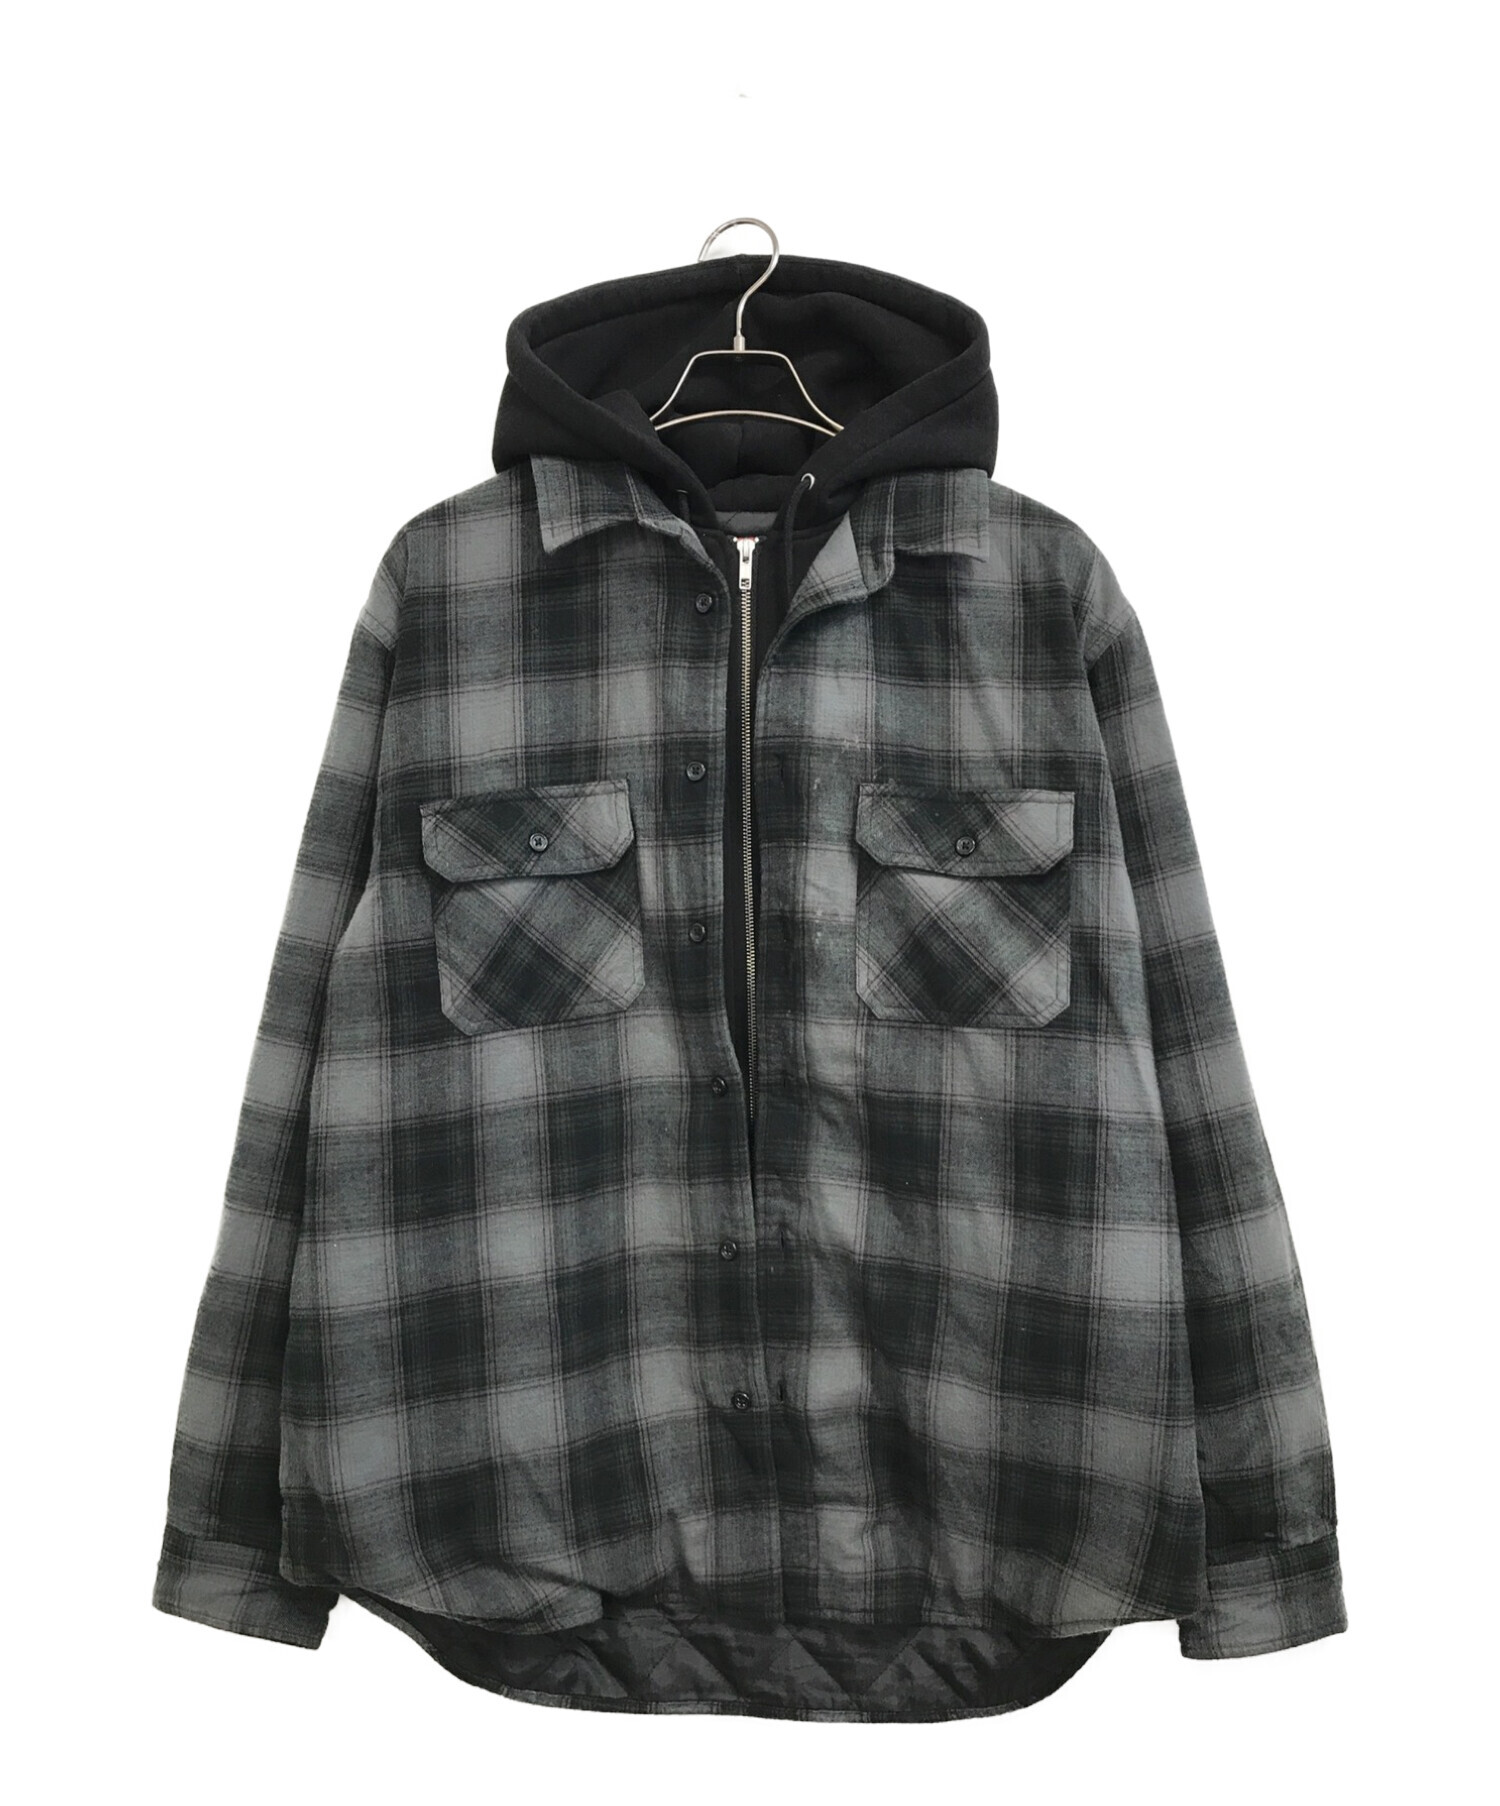 Lサイズ hooded flannel zip up shirt black